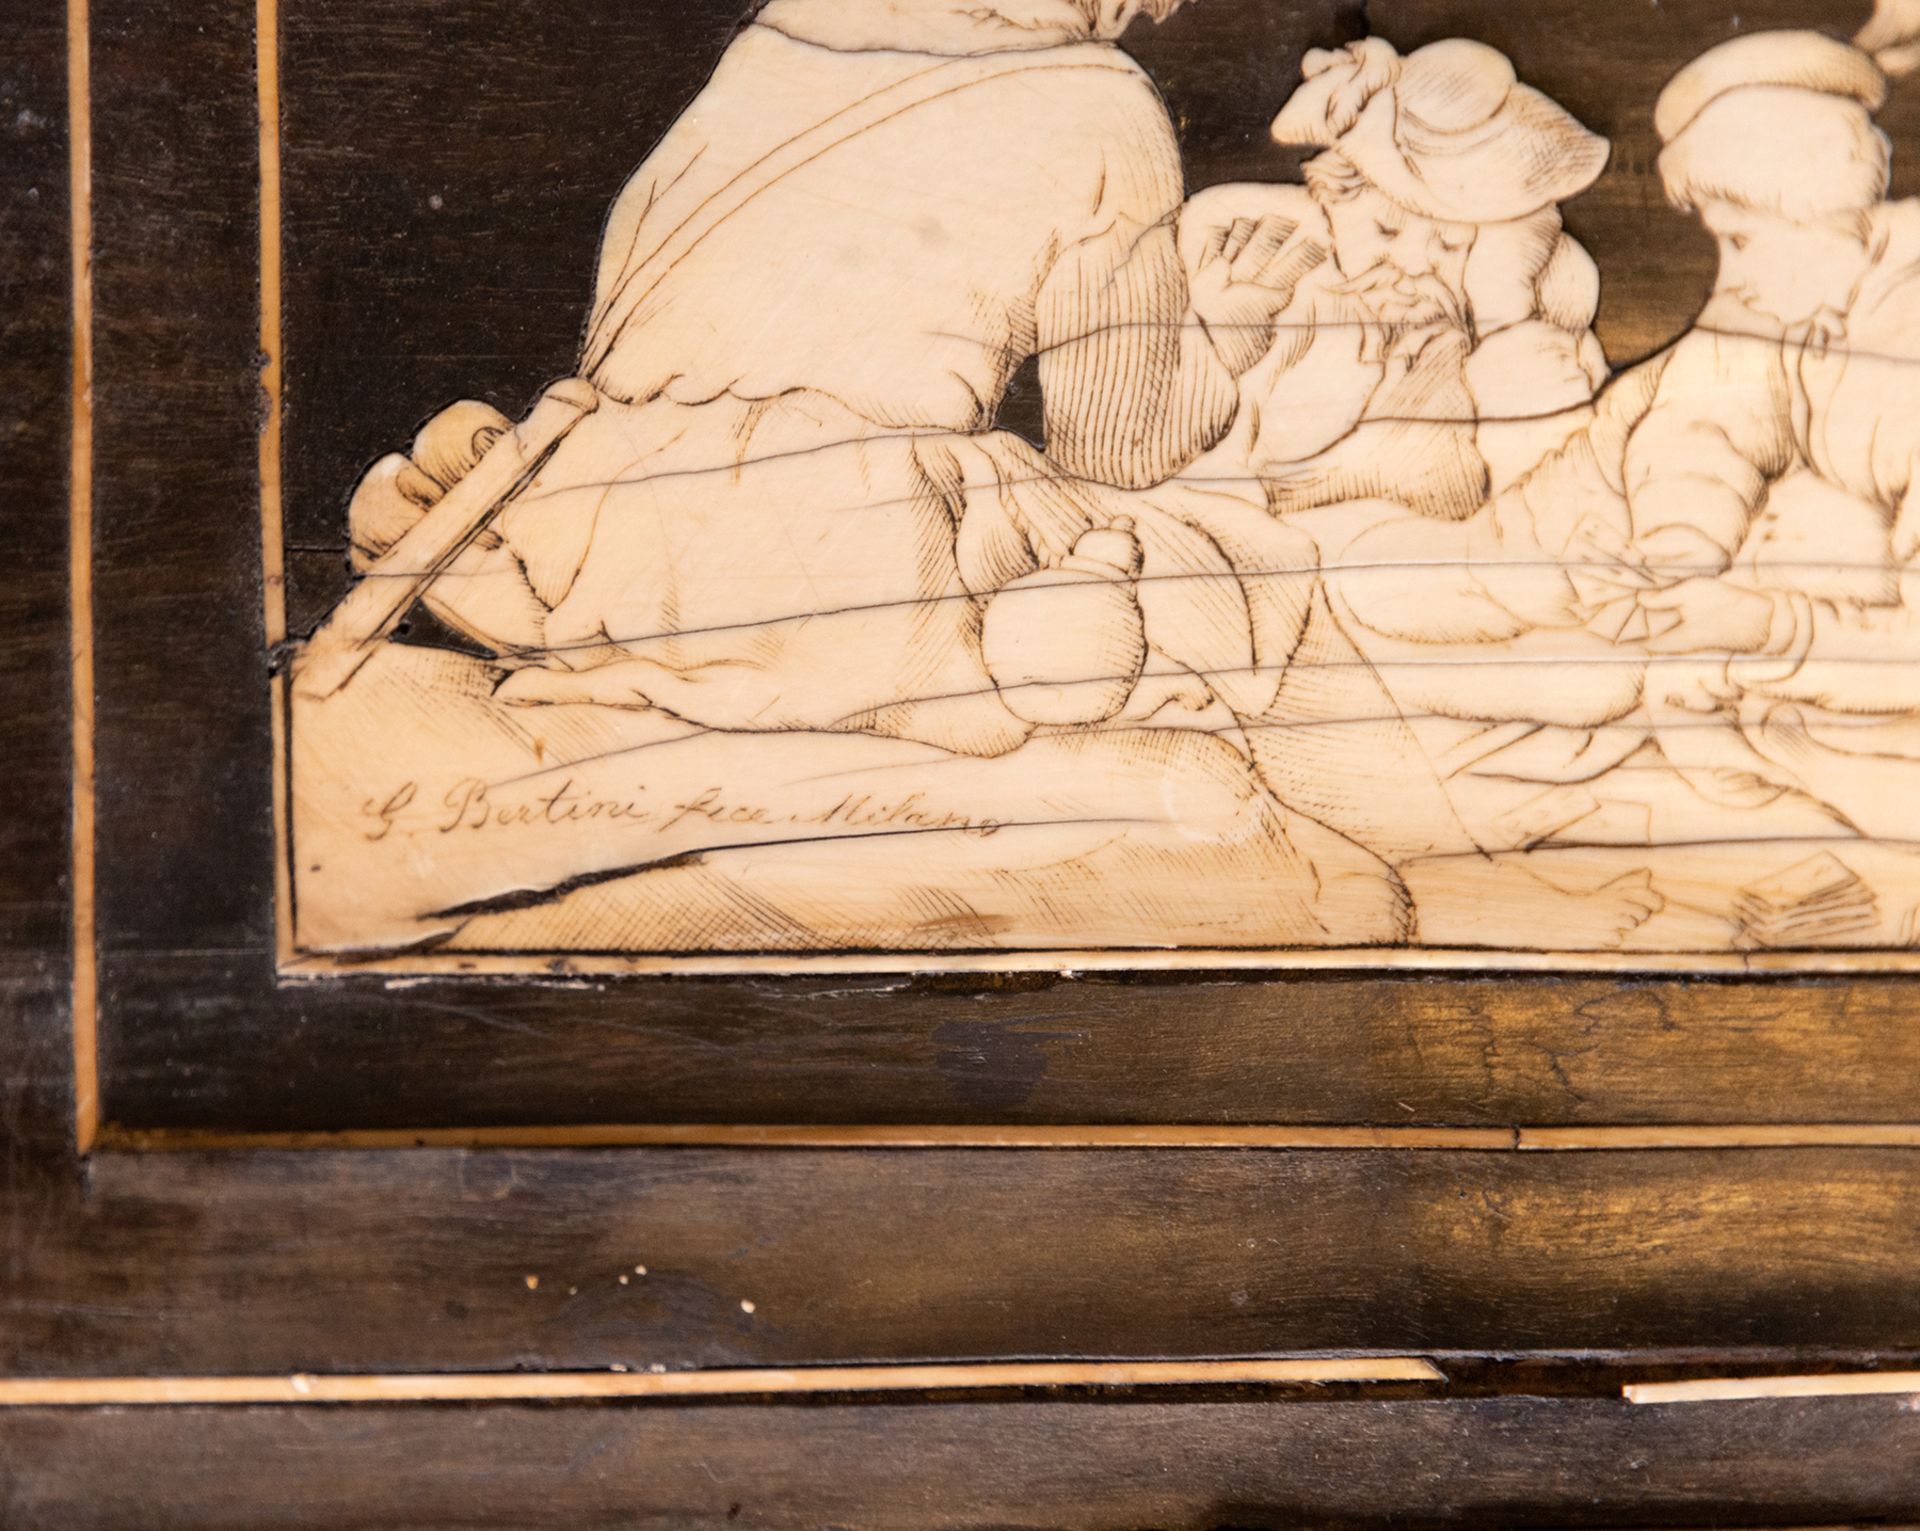 Exquisite Florentine Desk in ebony and bone inlay, signed Joseph Bertin(?)/Negt. de furniture ébene, - Image 5 of 9